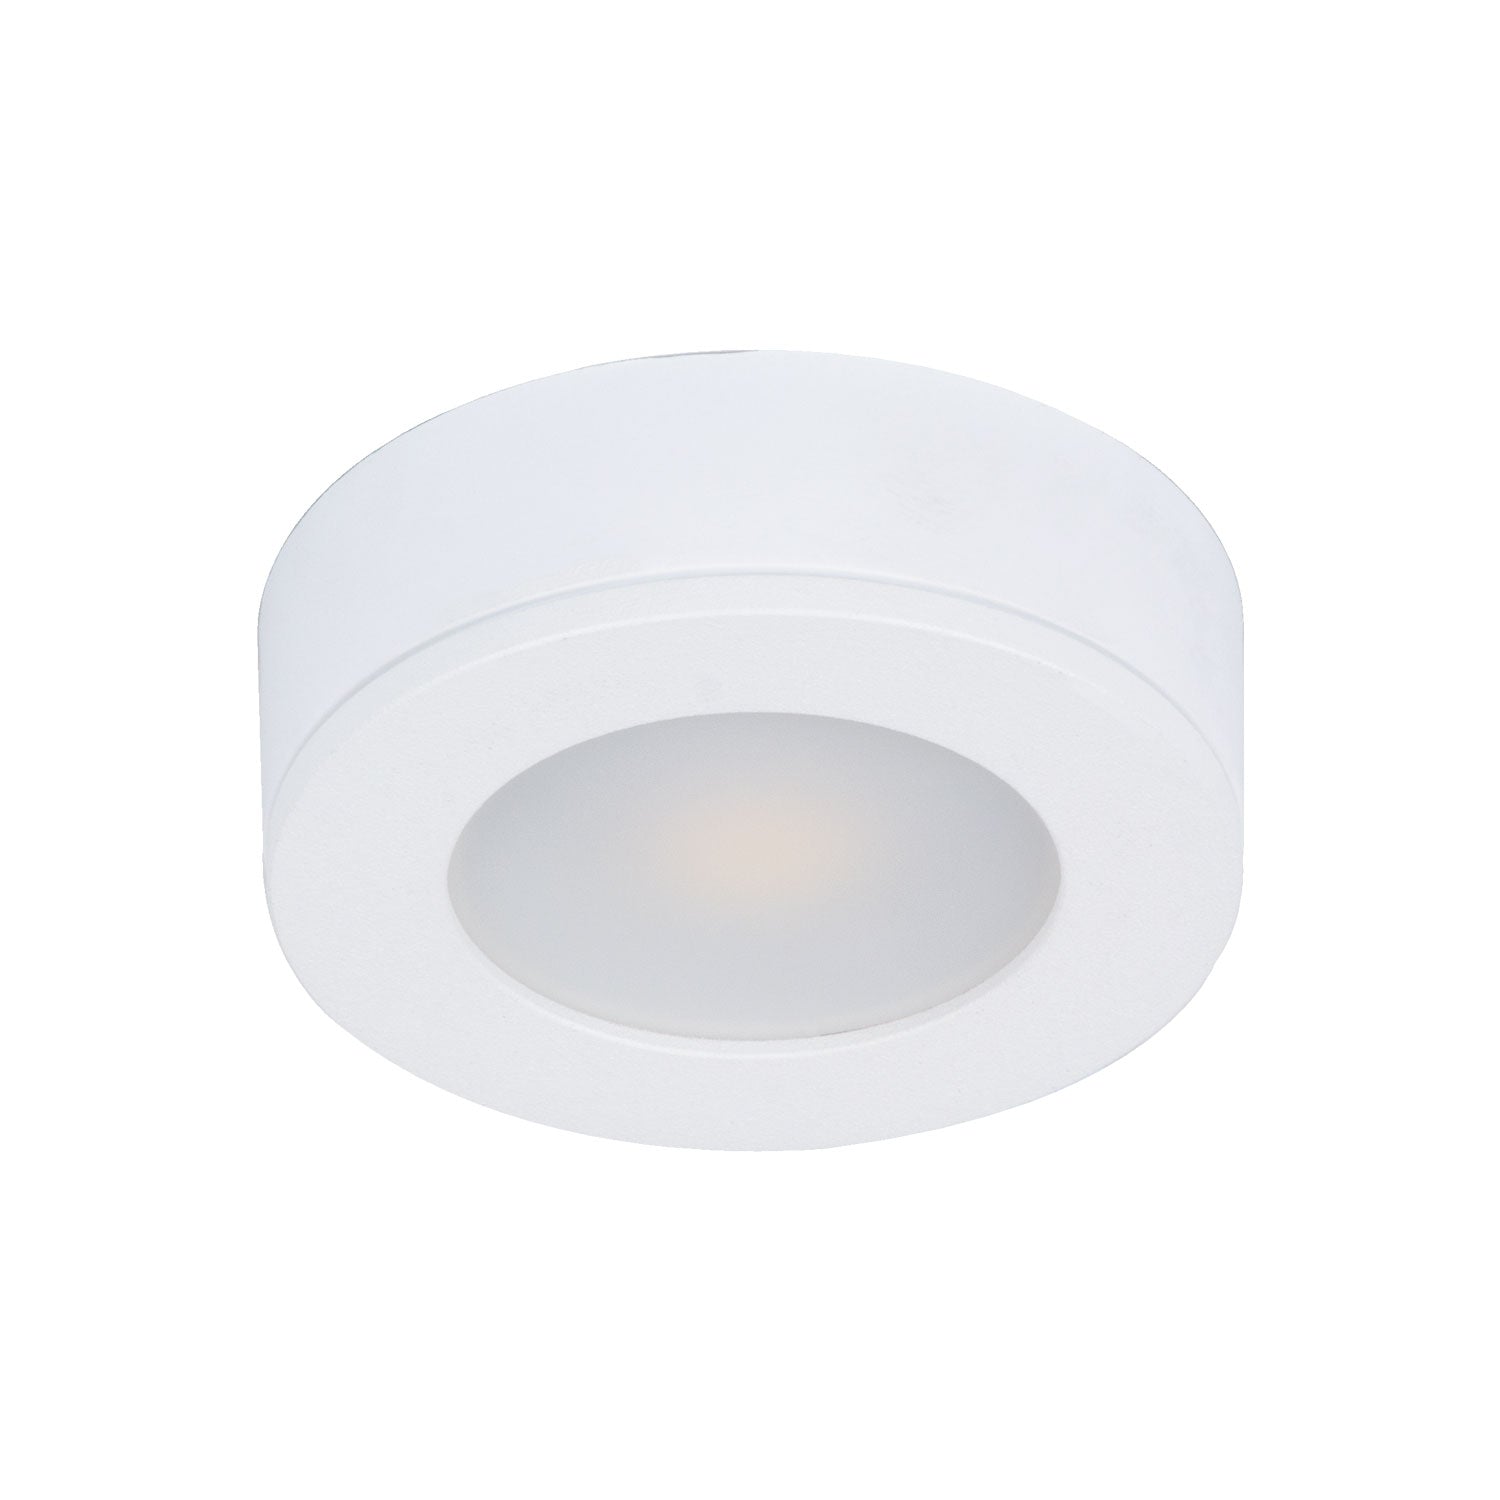 Domus Lighting Cabinet Light White / 3000K DOMUS ASTRA CABINET LIGHT WITH METAL BODY Lights-For-You 21282